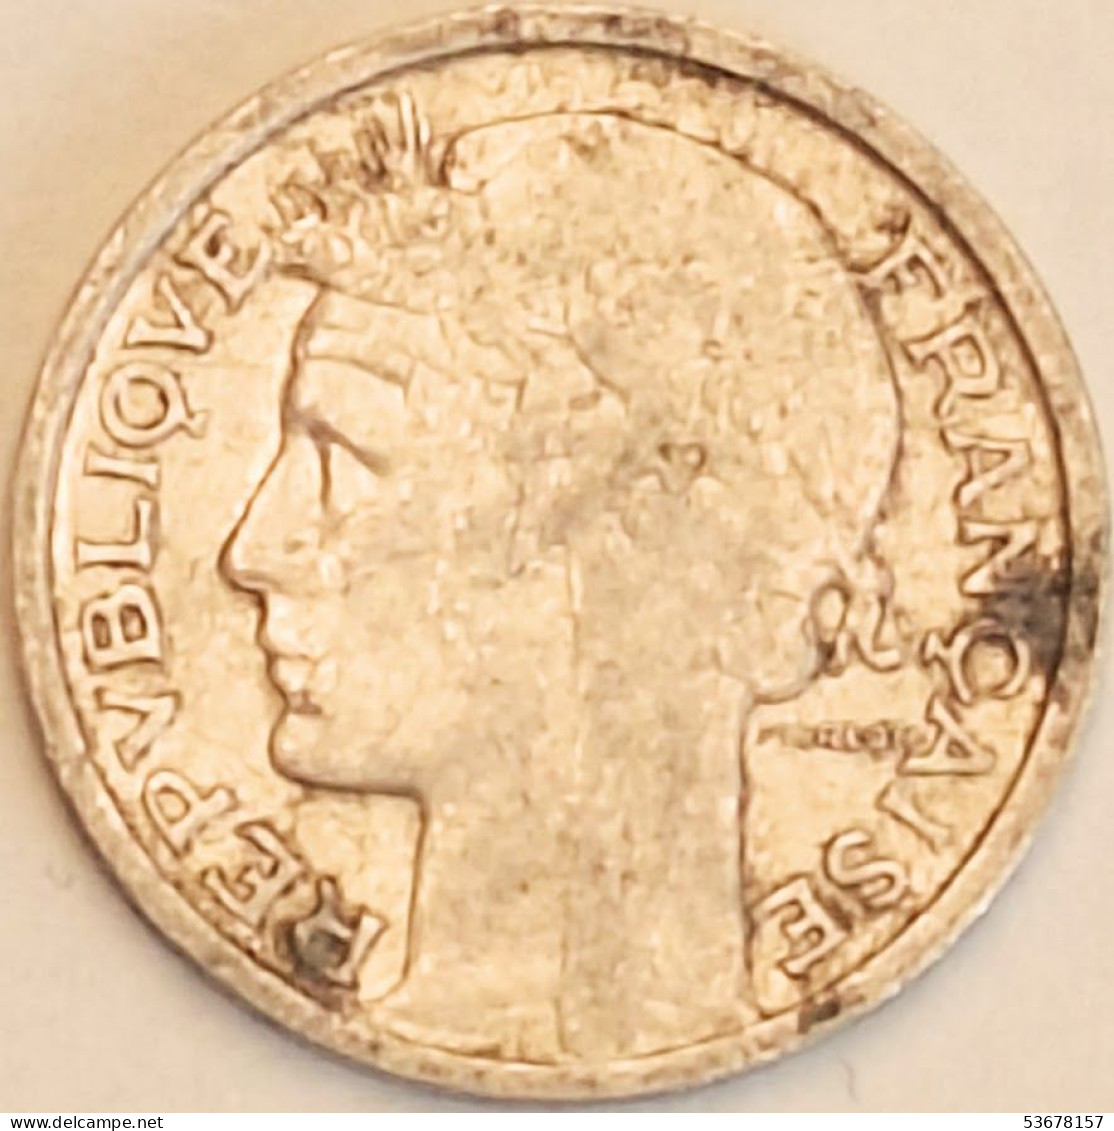 France - 50 Centimes 1944, KM# 894.1a (#4052) - 50 Centimes